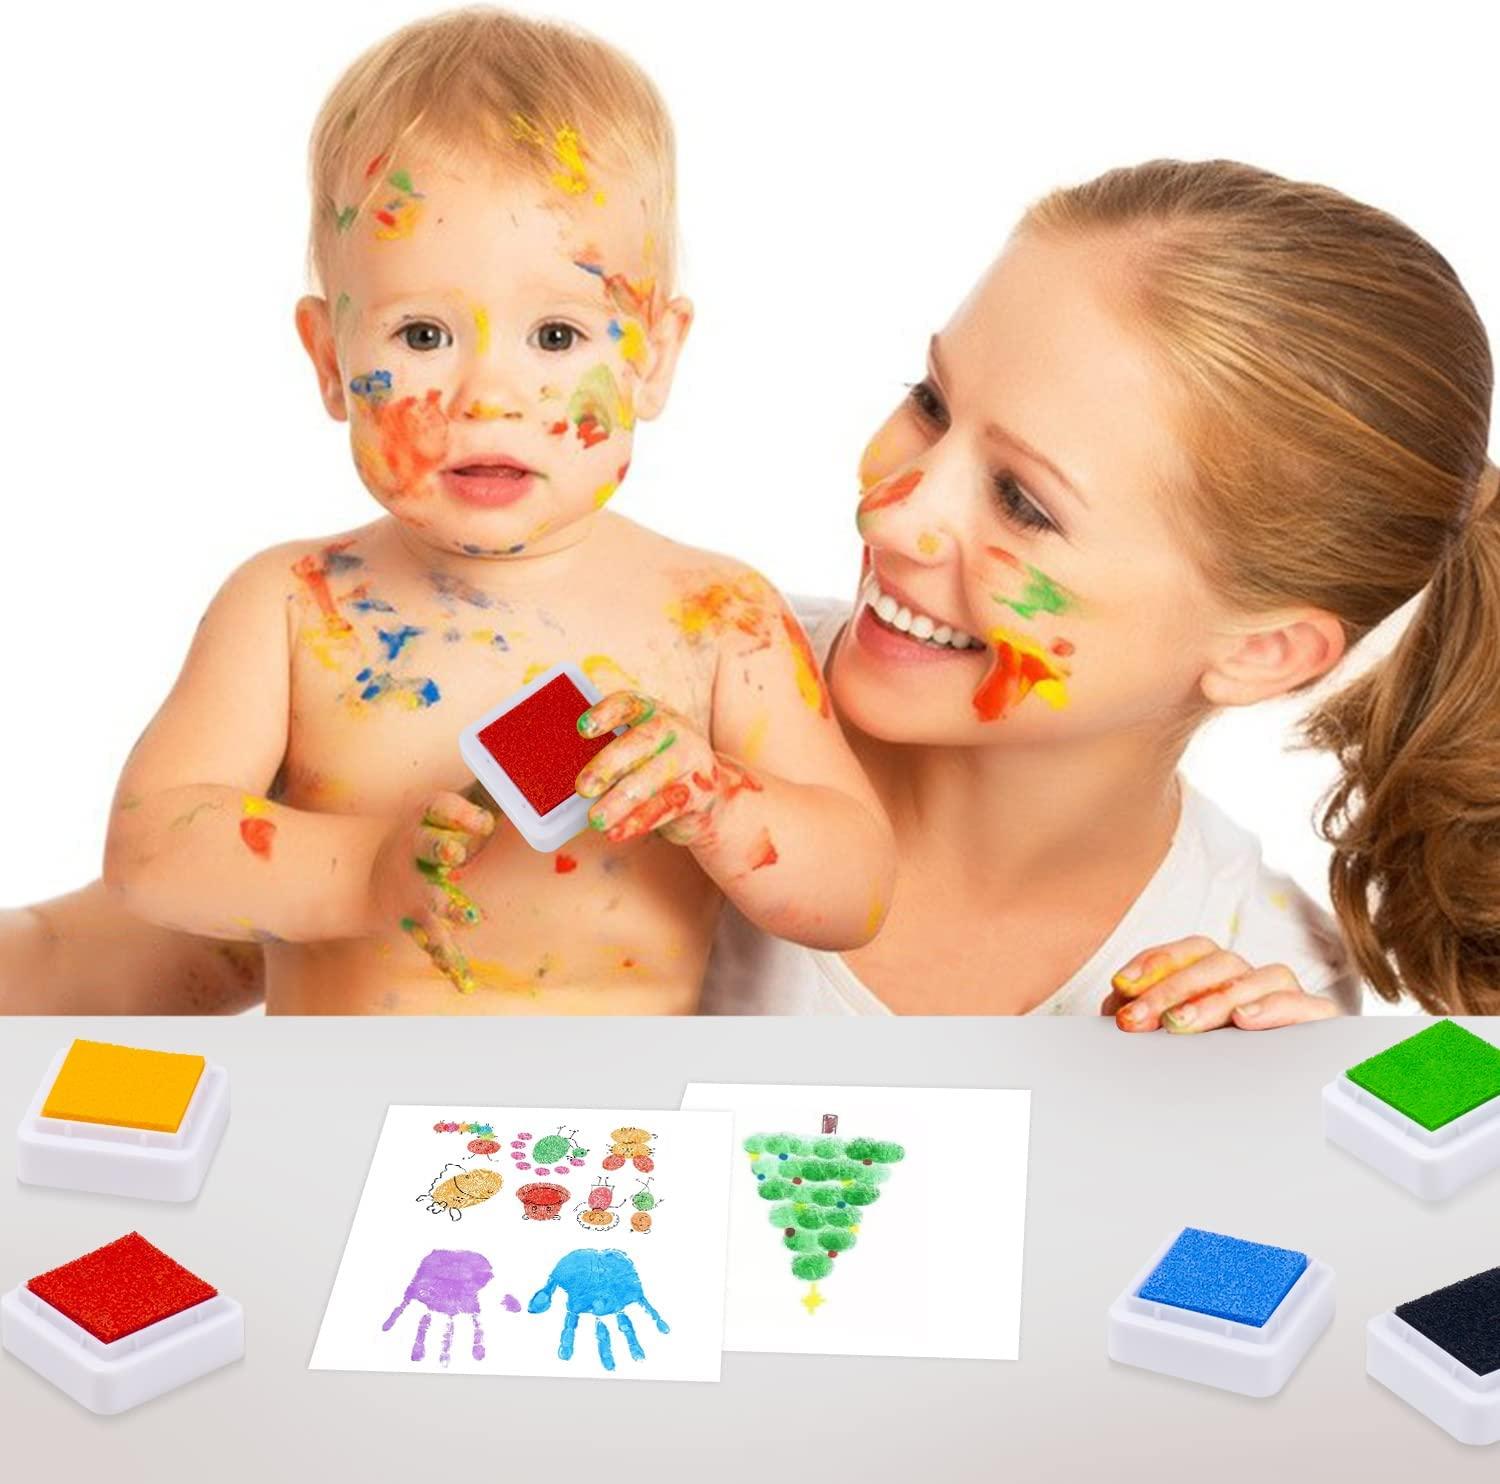 Pamkya Ink Pad 12 Colors Washable Stamp Pad for Kids, 12pcs